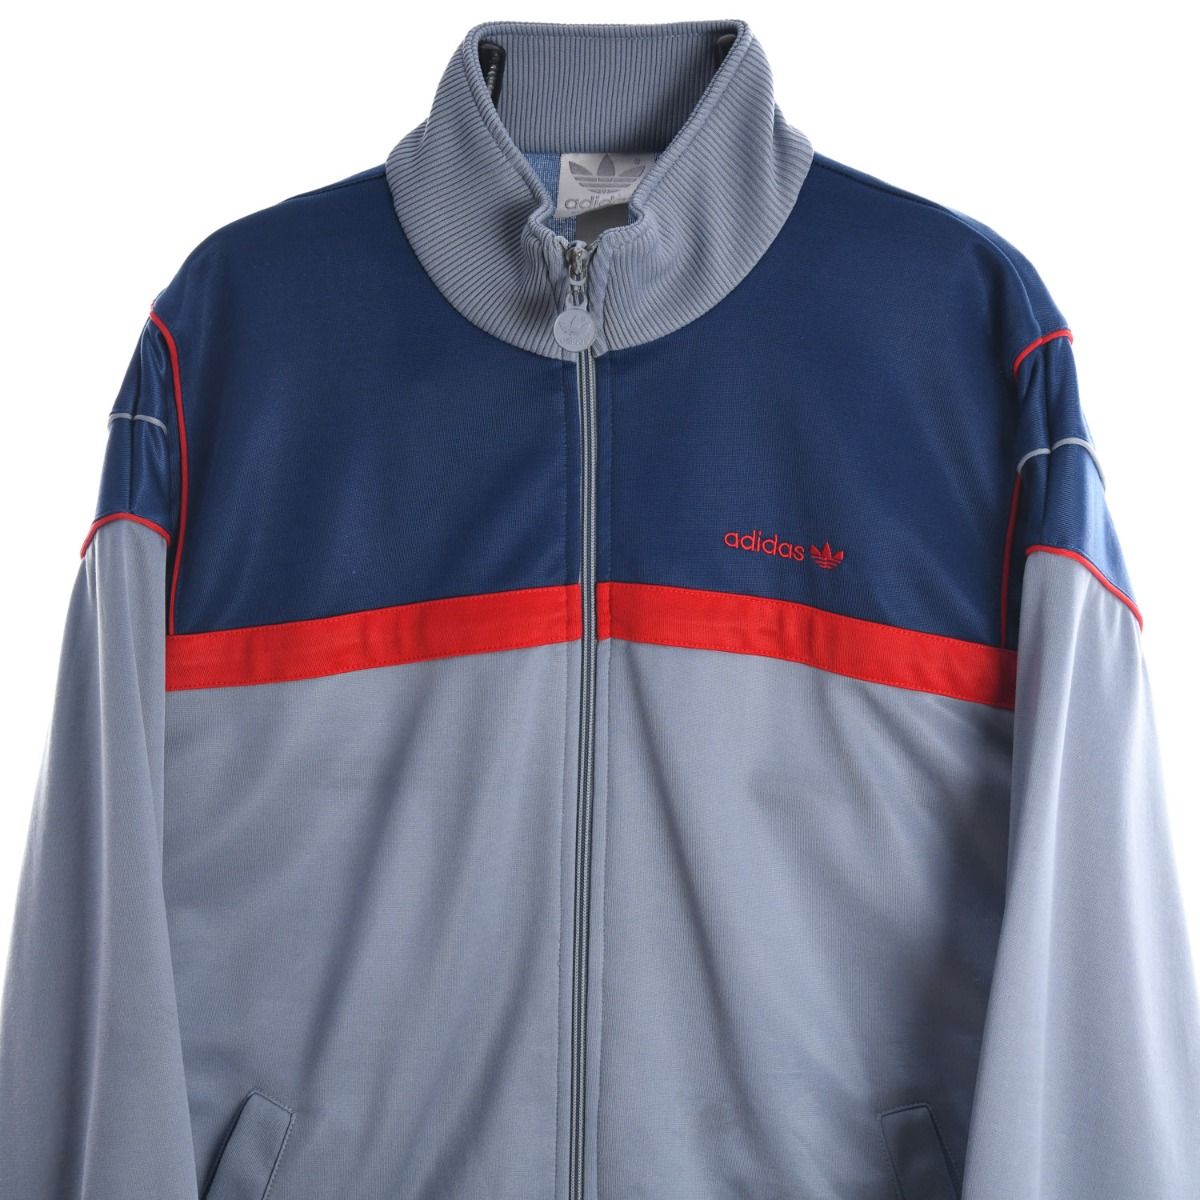 Adidas Late 1980s Jacket